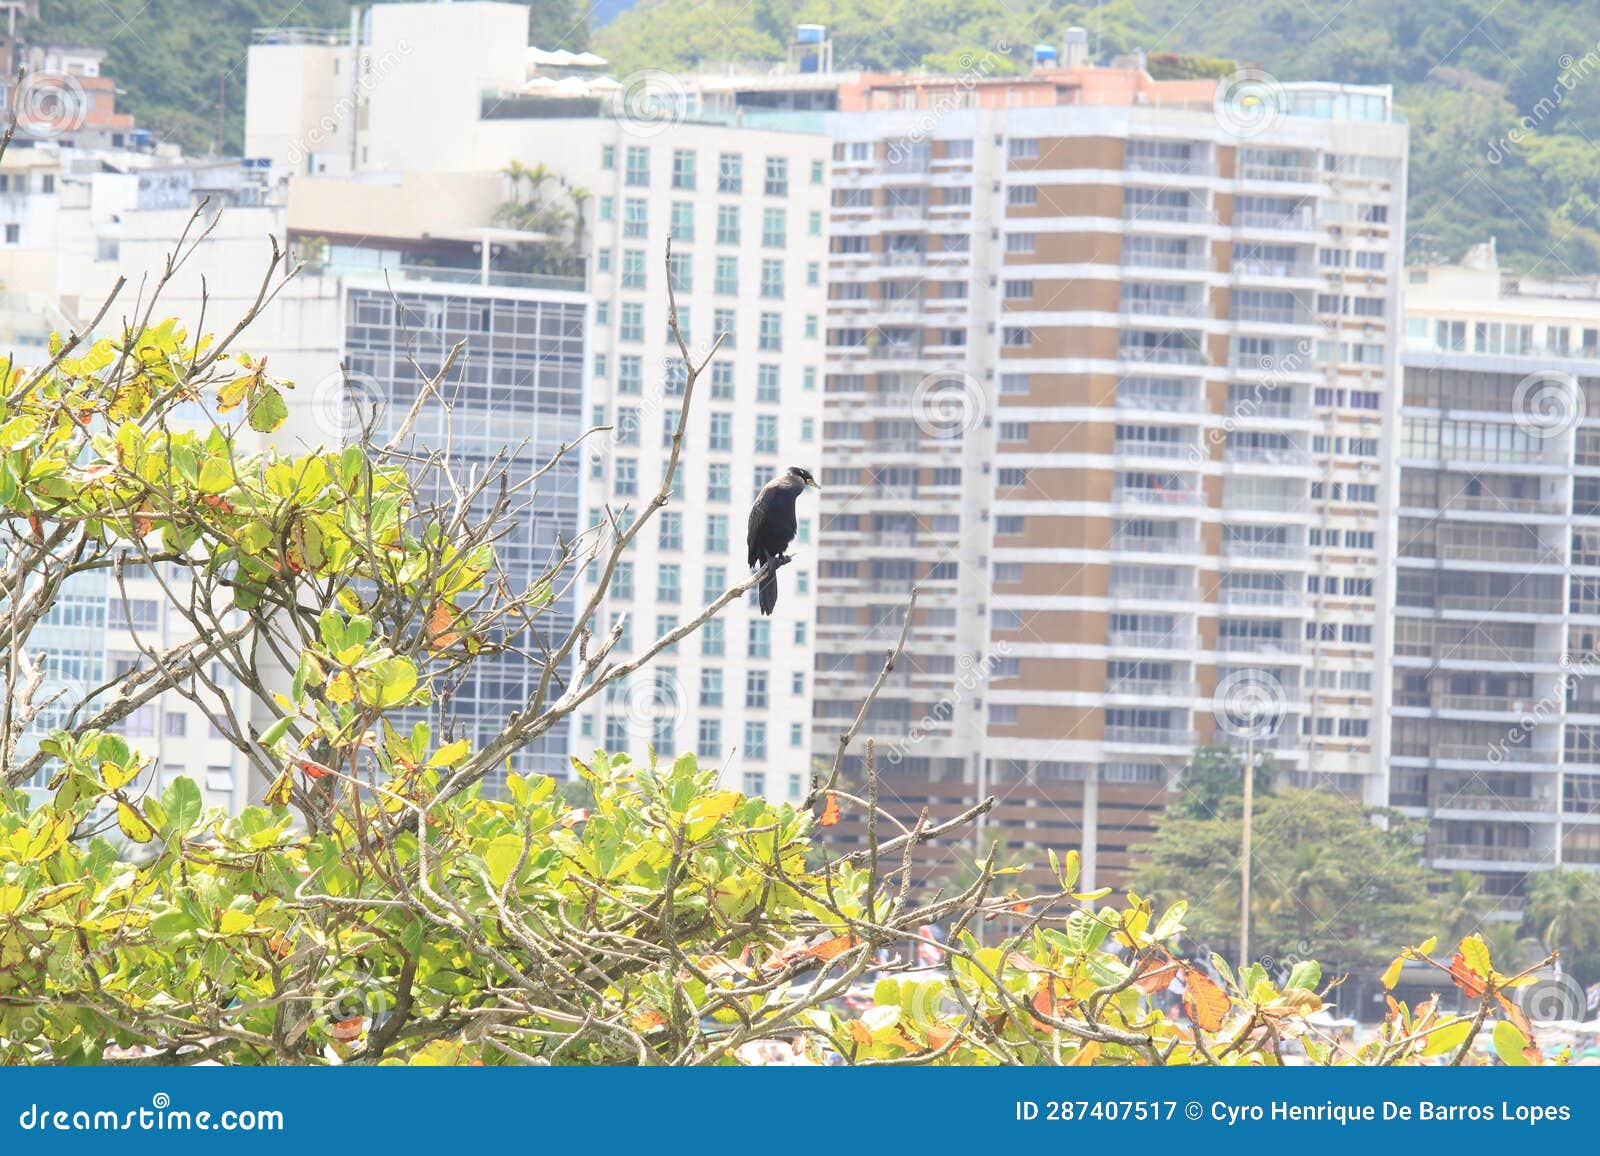 neotropic cormorant (nannopterum brasilianum), olivaceous cormorant, biguÃ¡ from forte de copacabana, rio de janeiro